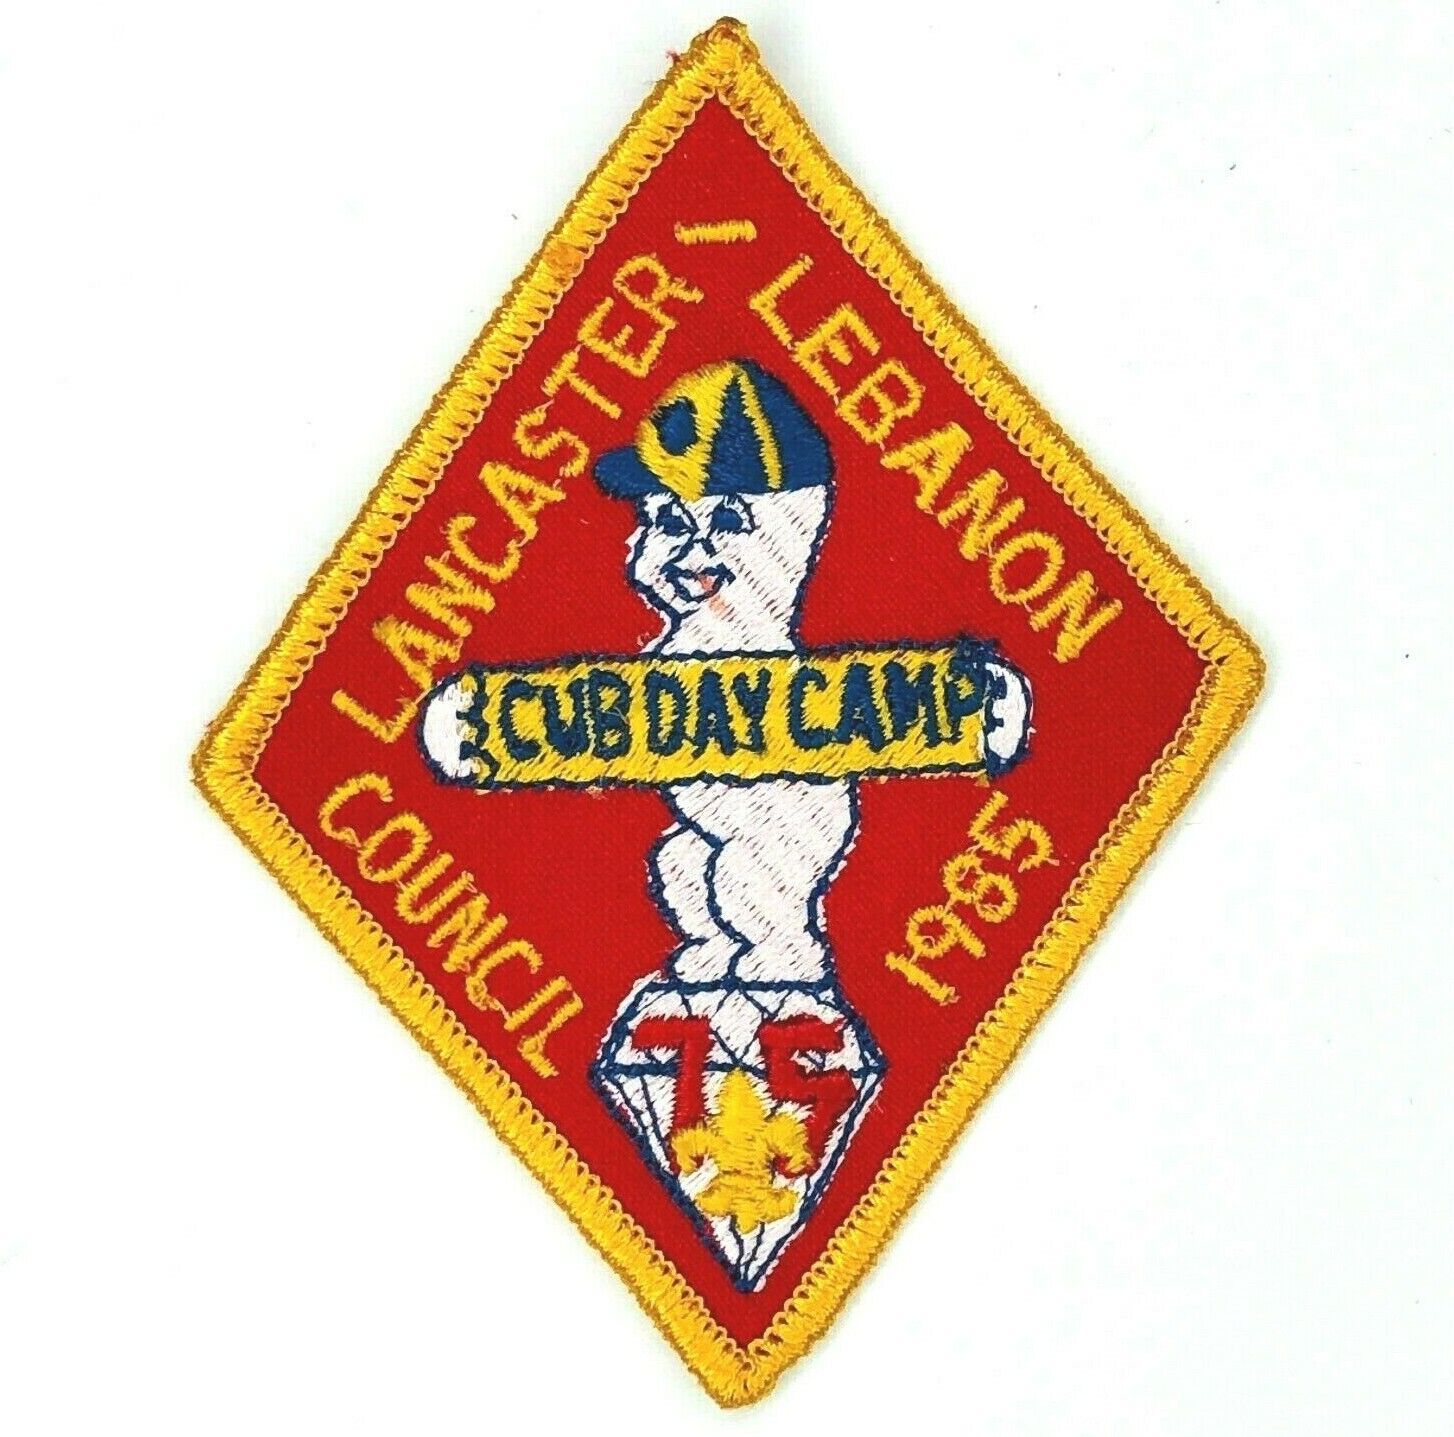 1985 Cub Day Camp Casper the Friendly Ghost Lancaster-Lebanon Council Patch